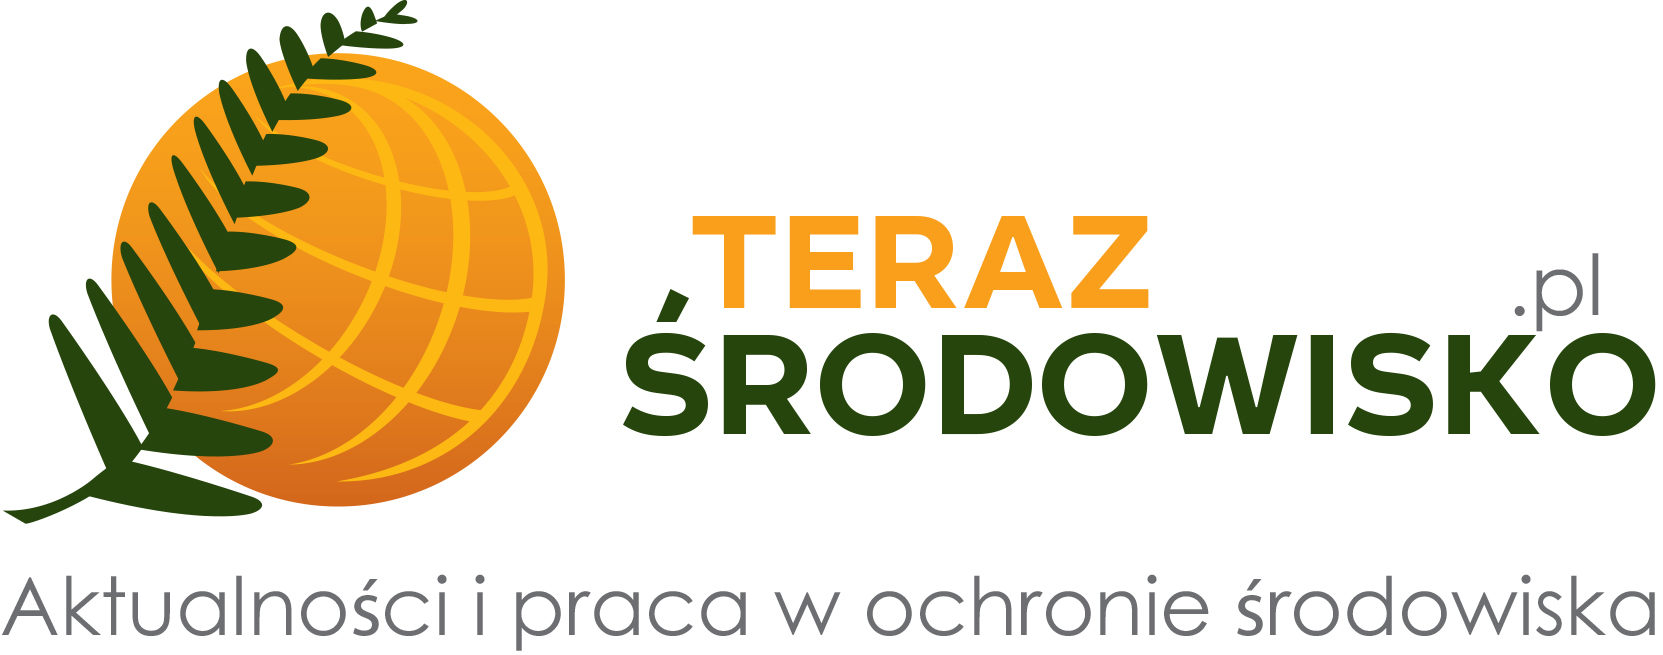 logo_teraz_srodowisko.jpg